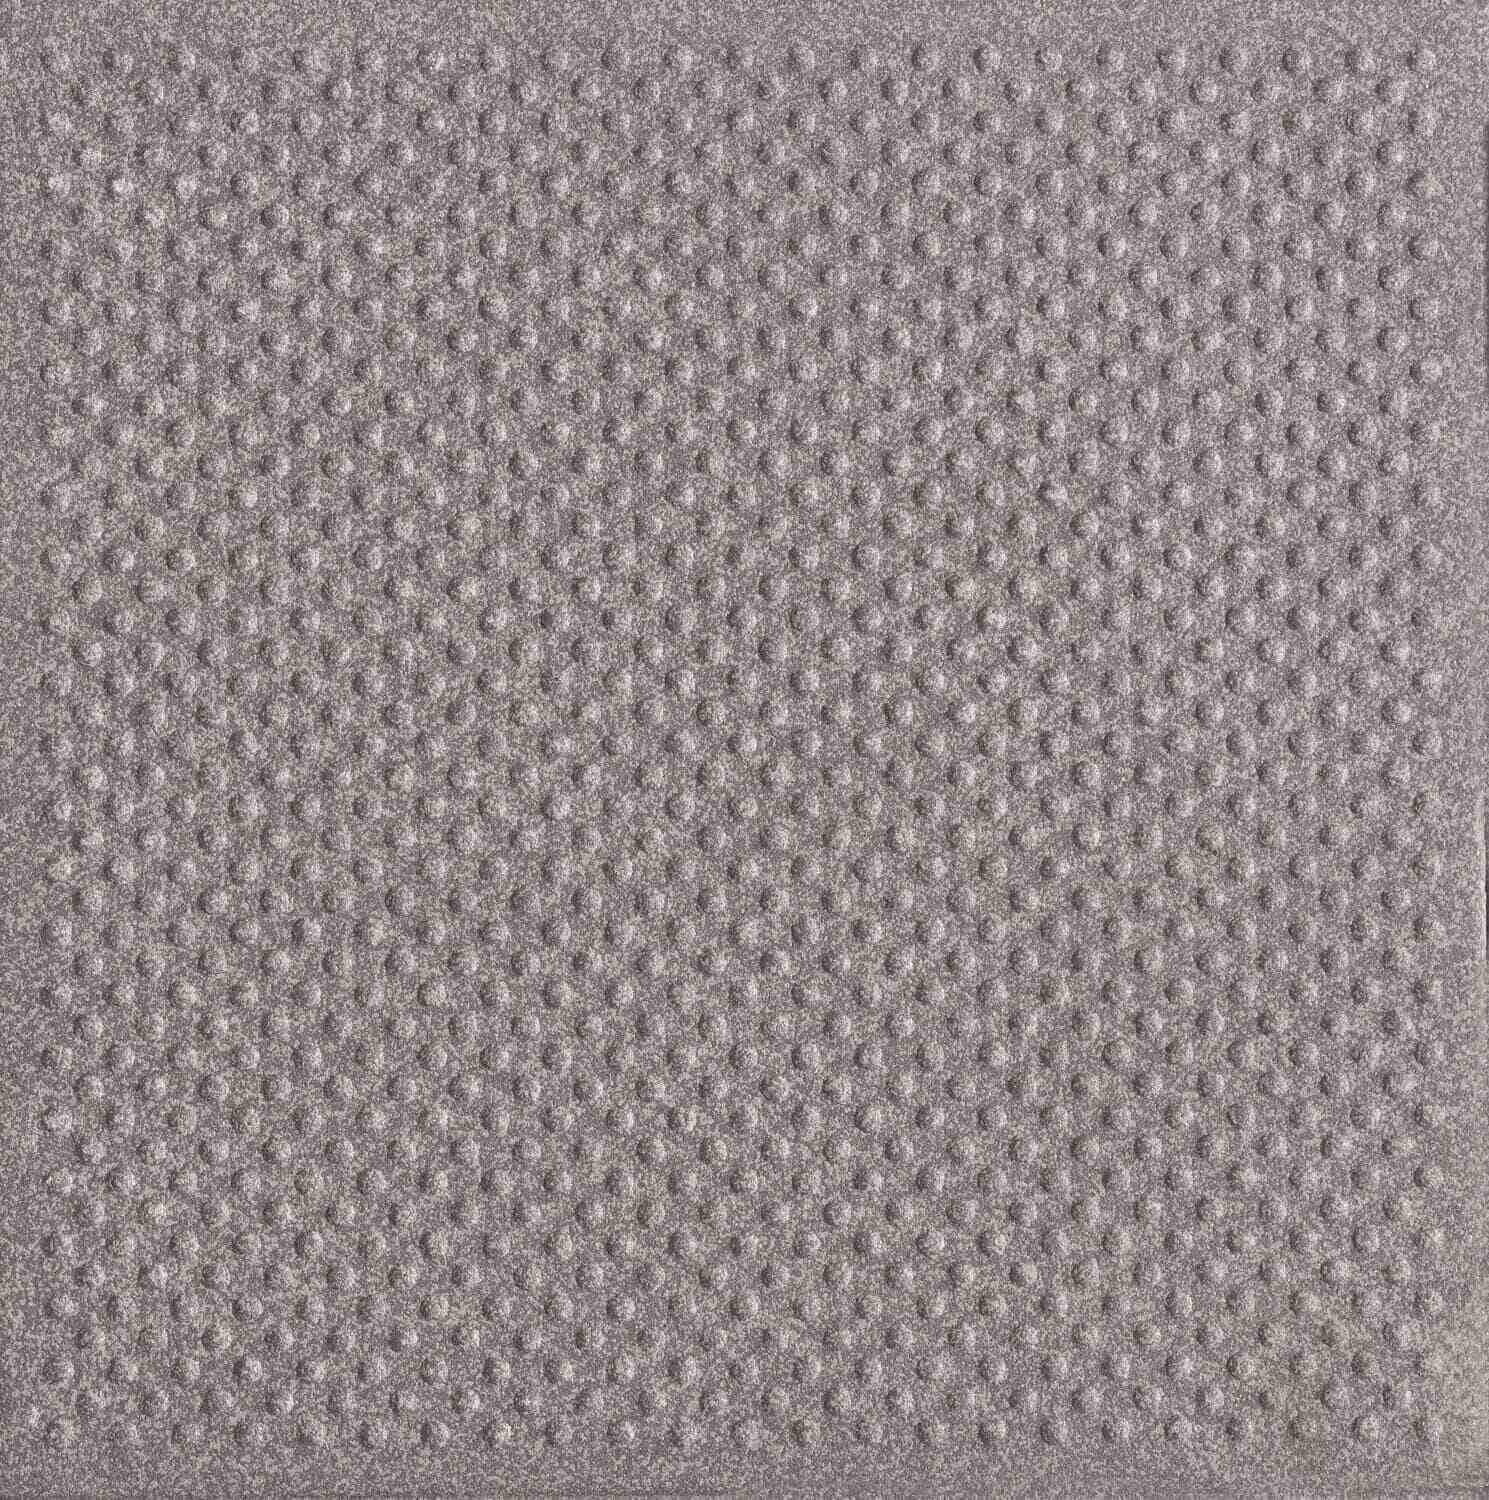 Dorset Woolliscroft Pinhead Dark Grey Slip Resistant Quarry Tile 148x148mm